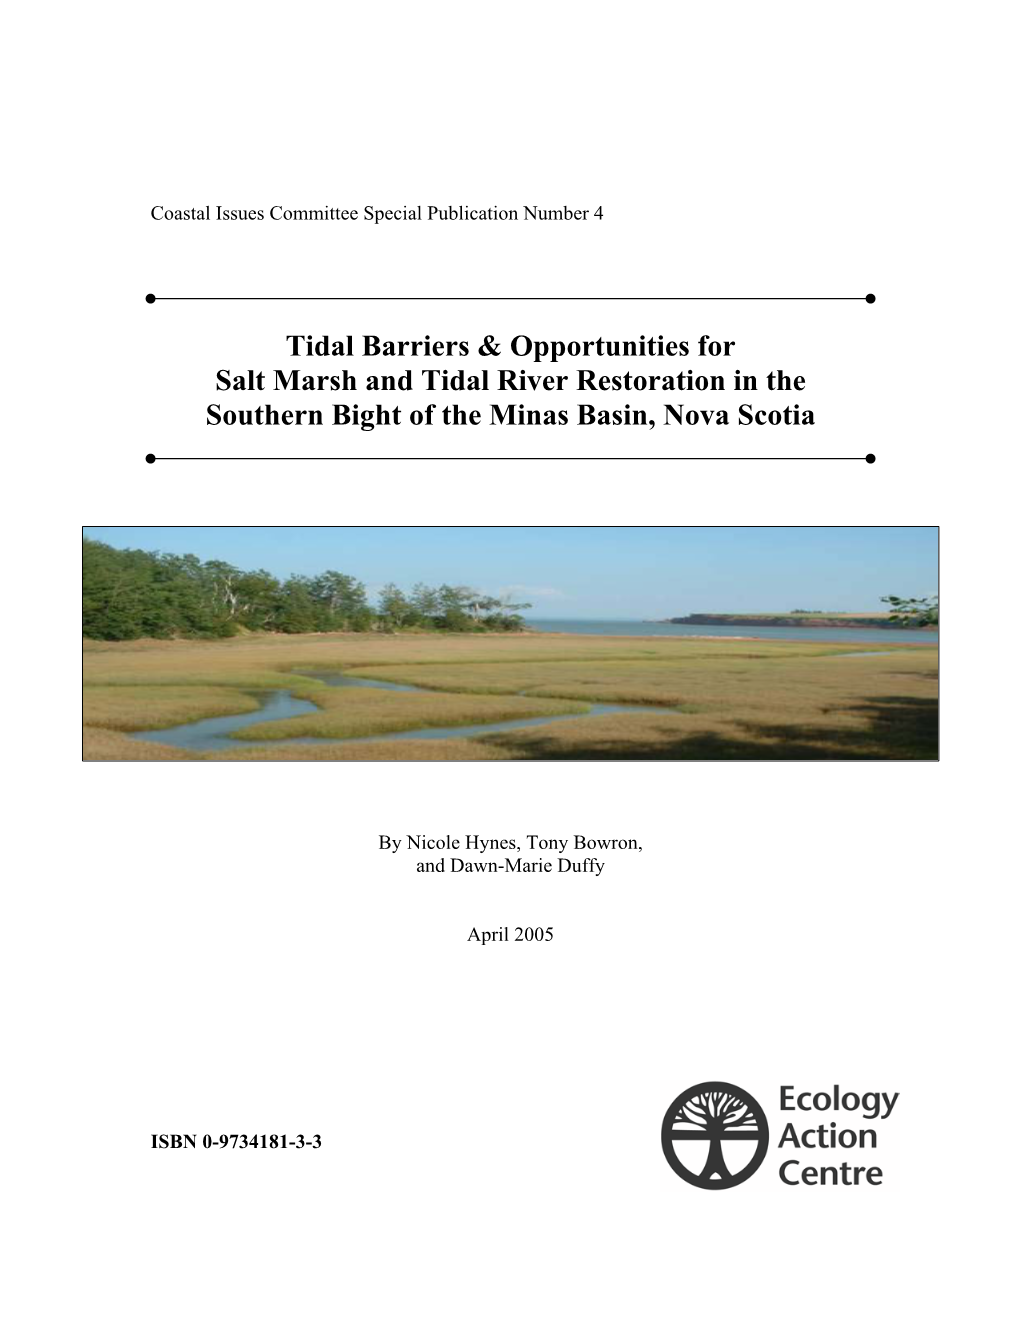 Tidal Barriers & Opportunities for Salt Marsh and Tidal River Restoration